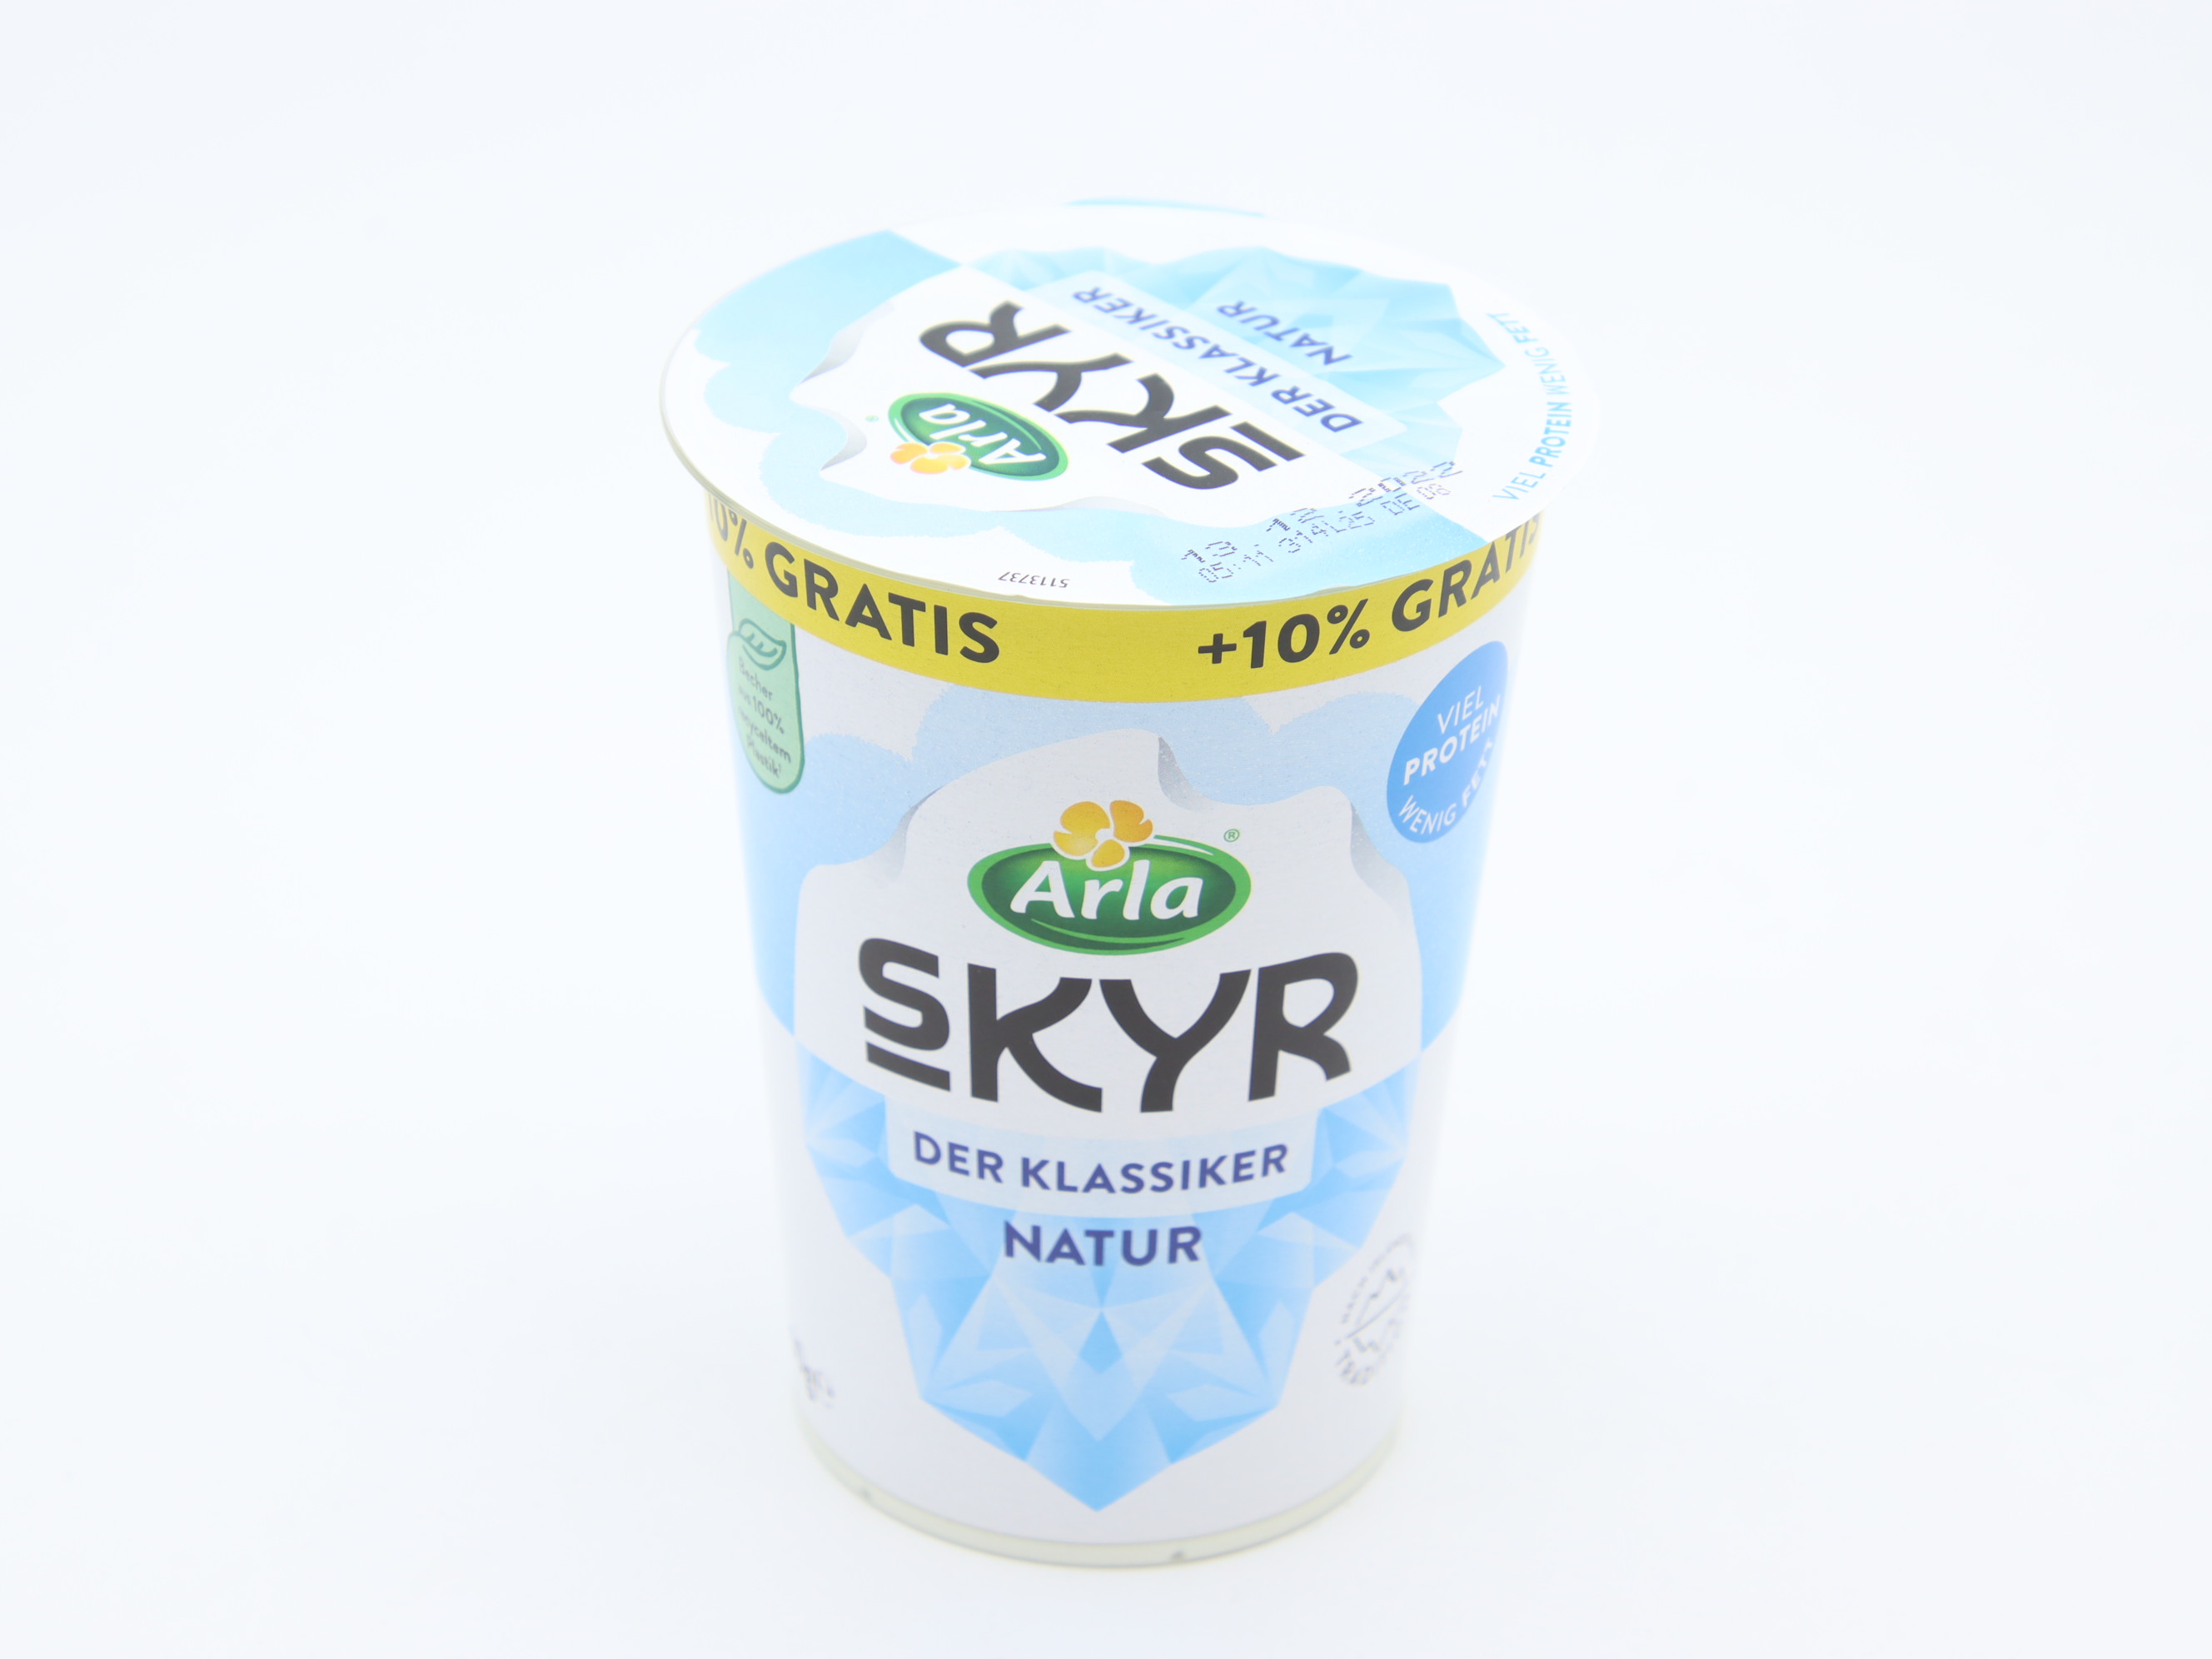 Bílý jogurt 500g: Arla – Skyr